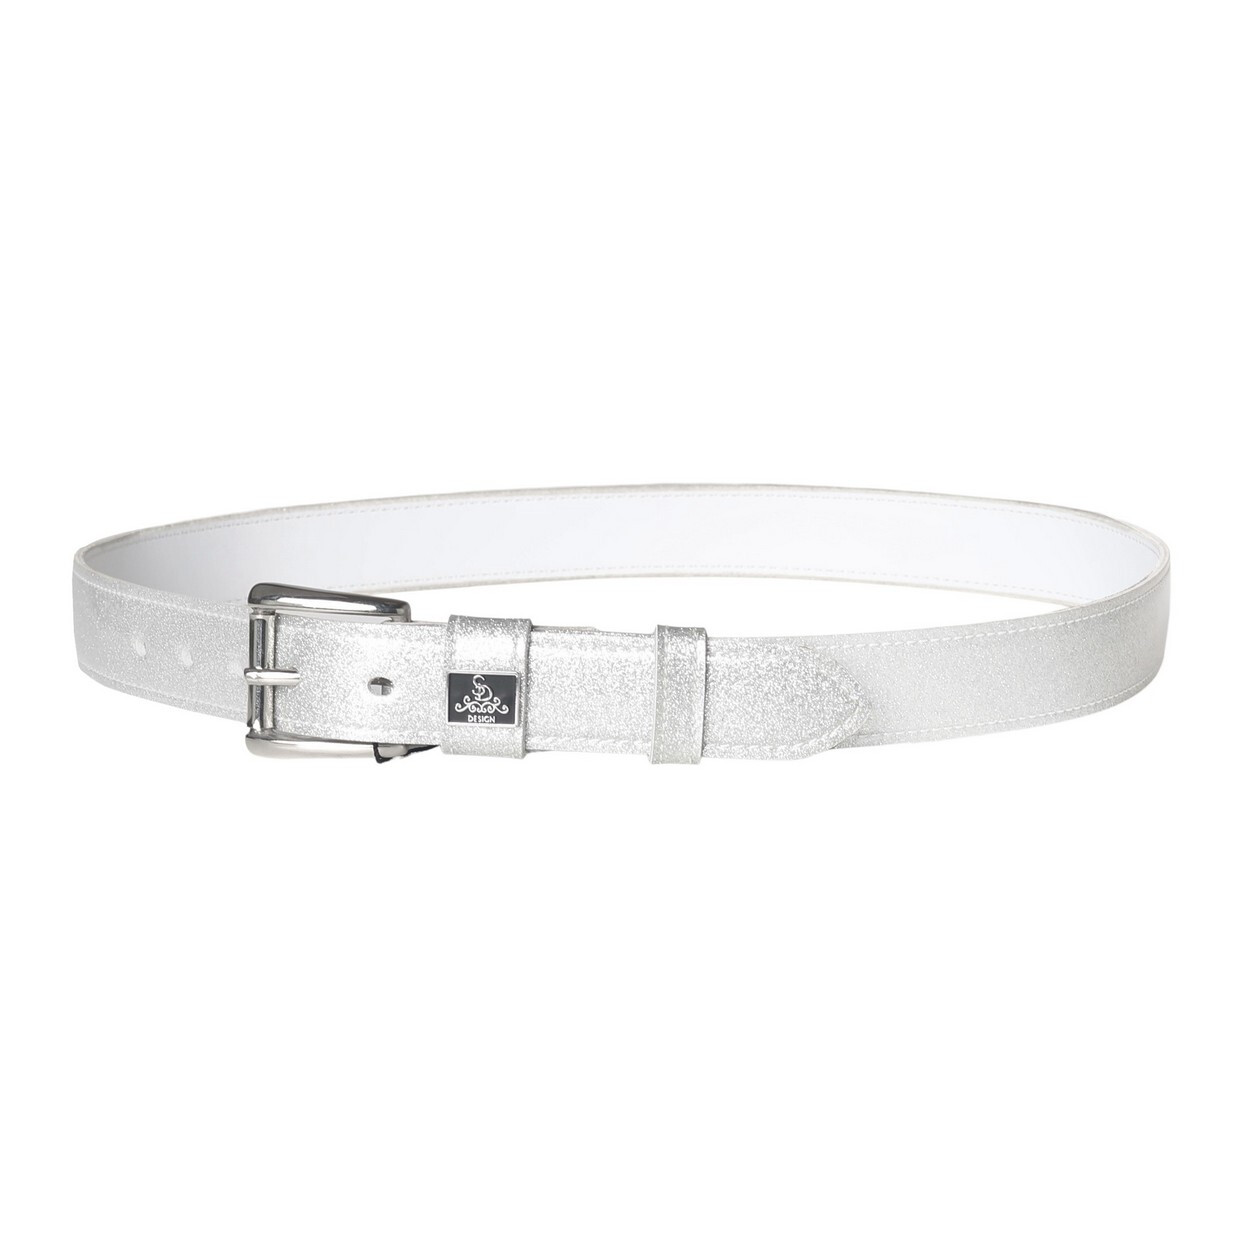 SD Design Mystery Belt (Silver Glitter, 33.4in/85cm)